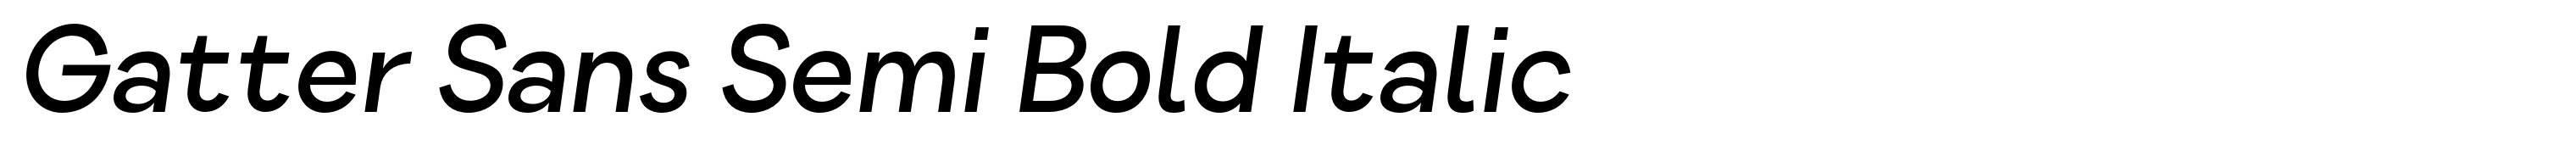 Gatter Sans Semi Bold Italic